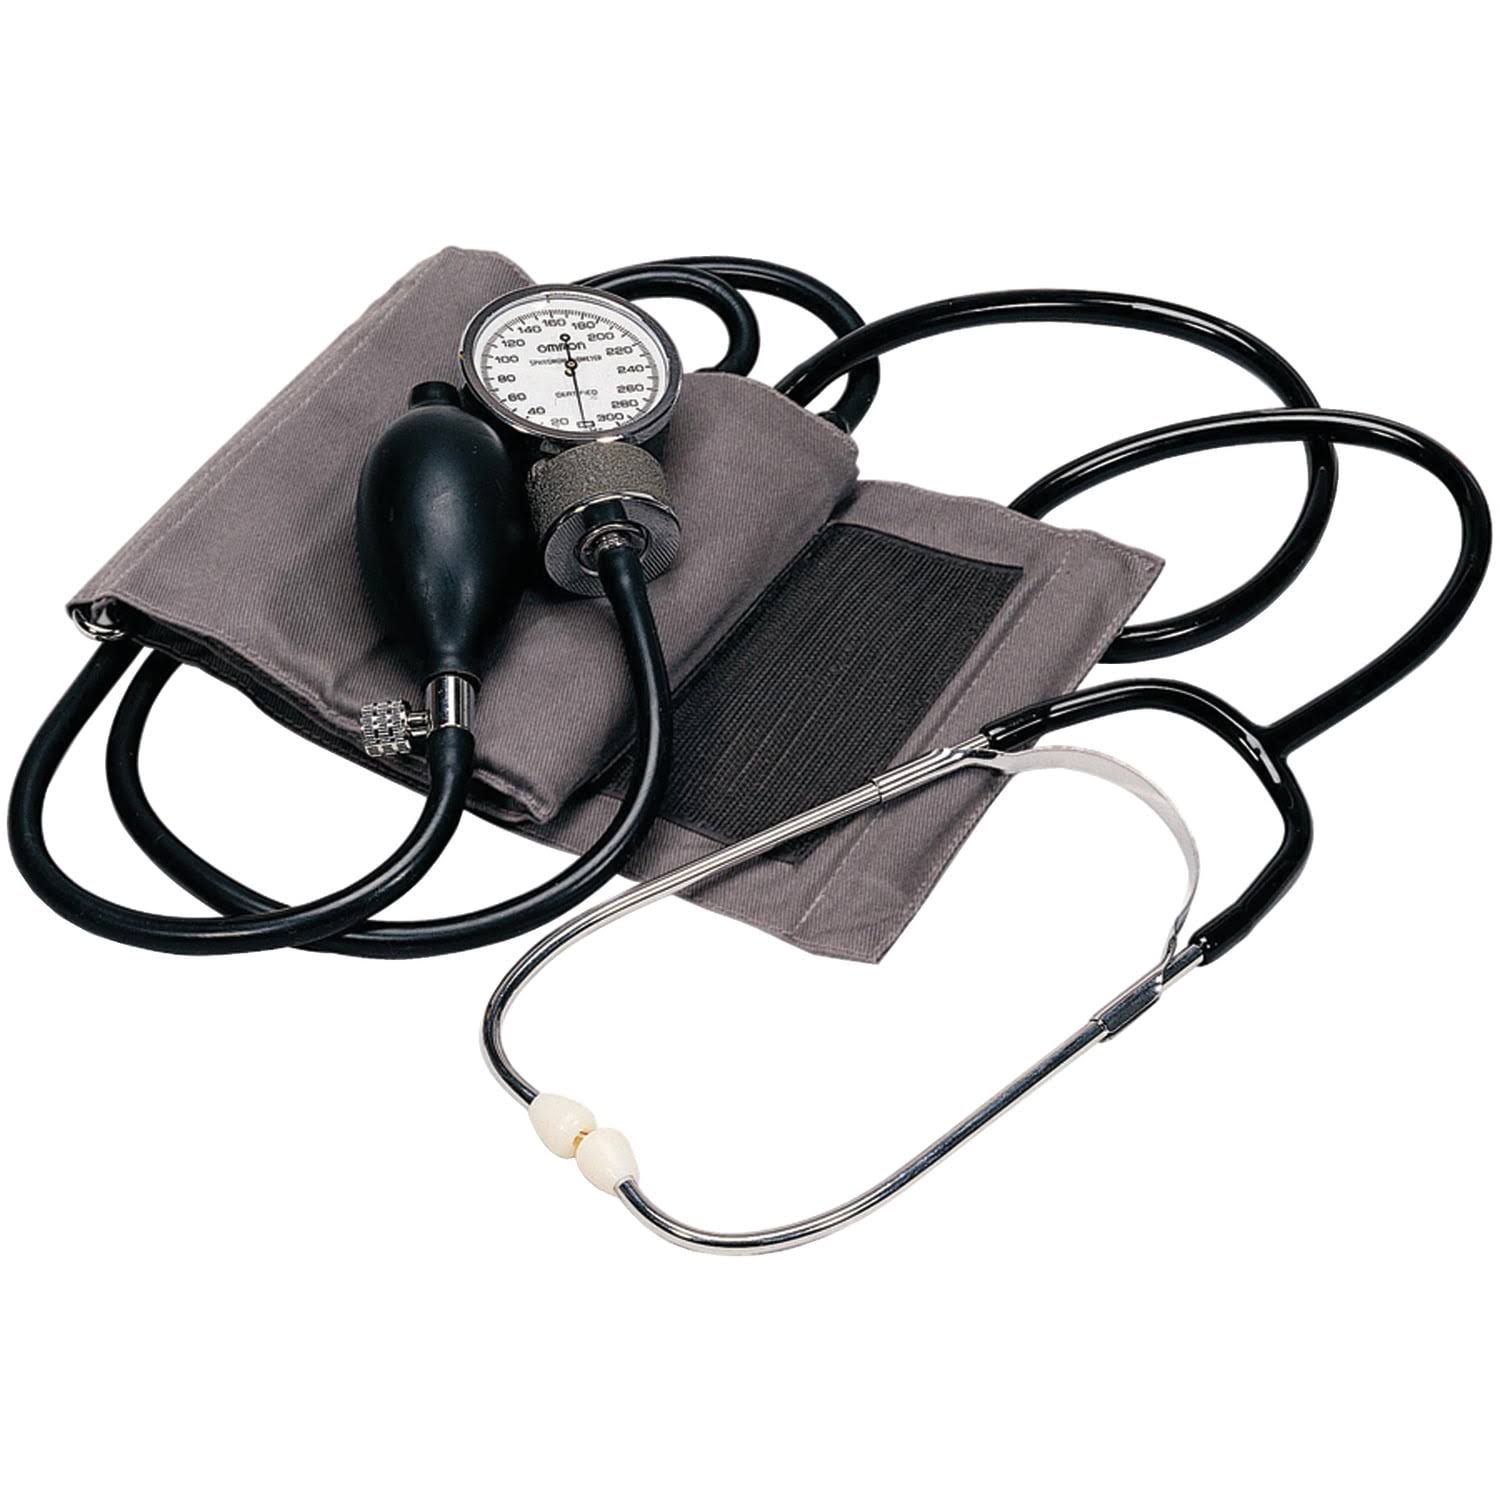 Omron Home Manual Blood Pressure Kit - Gray